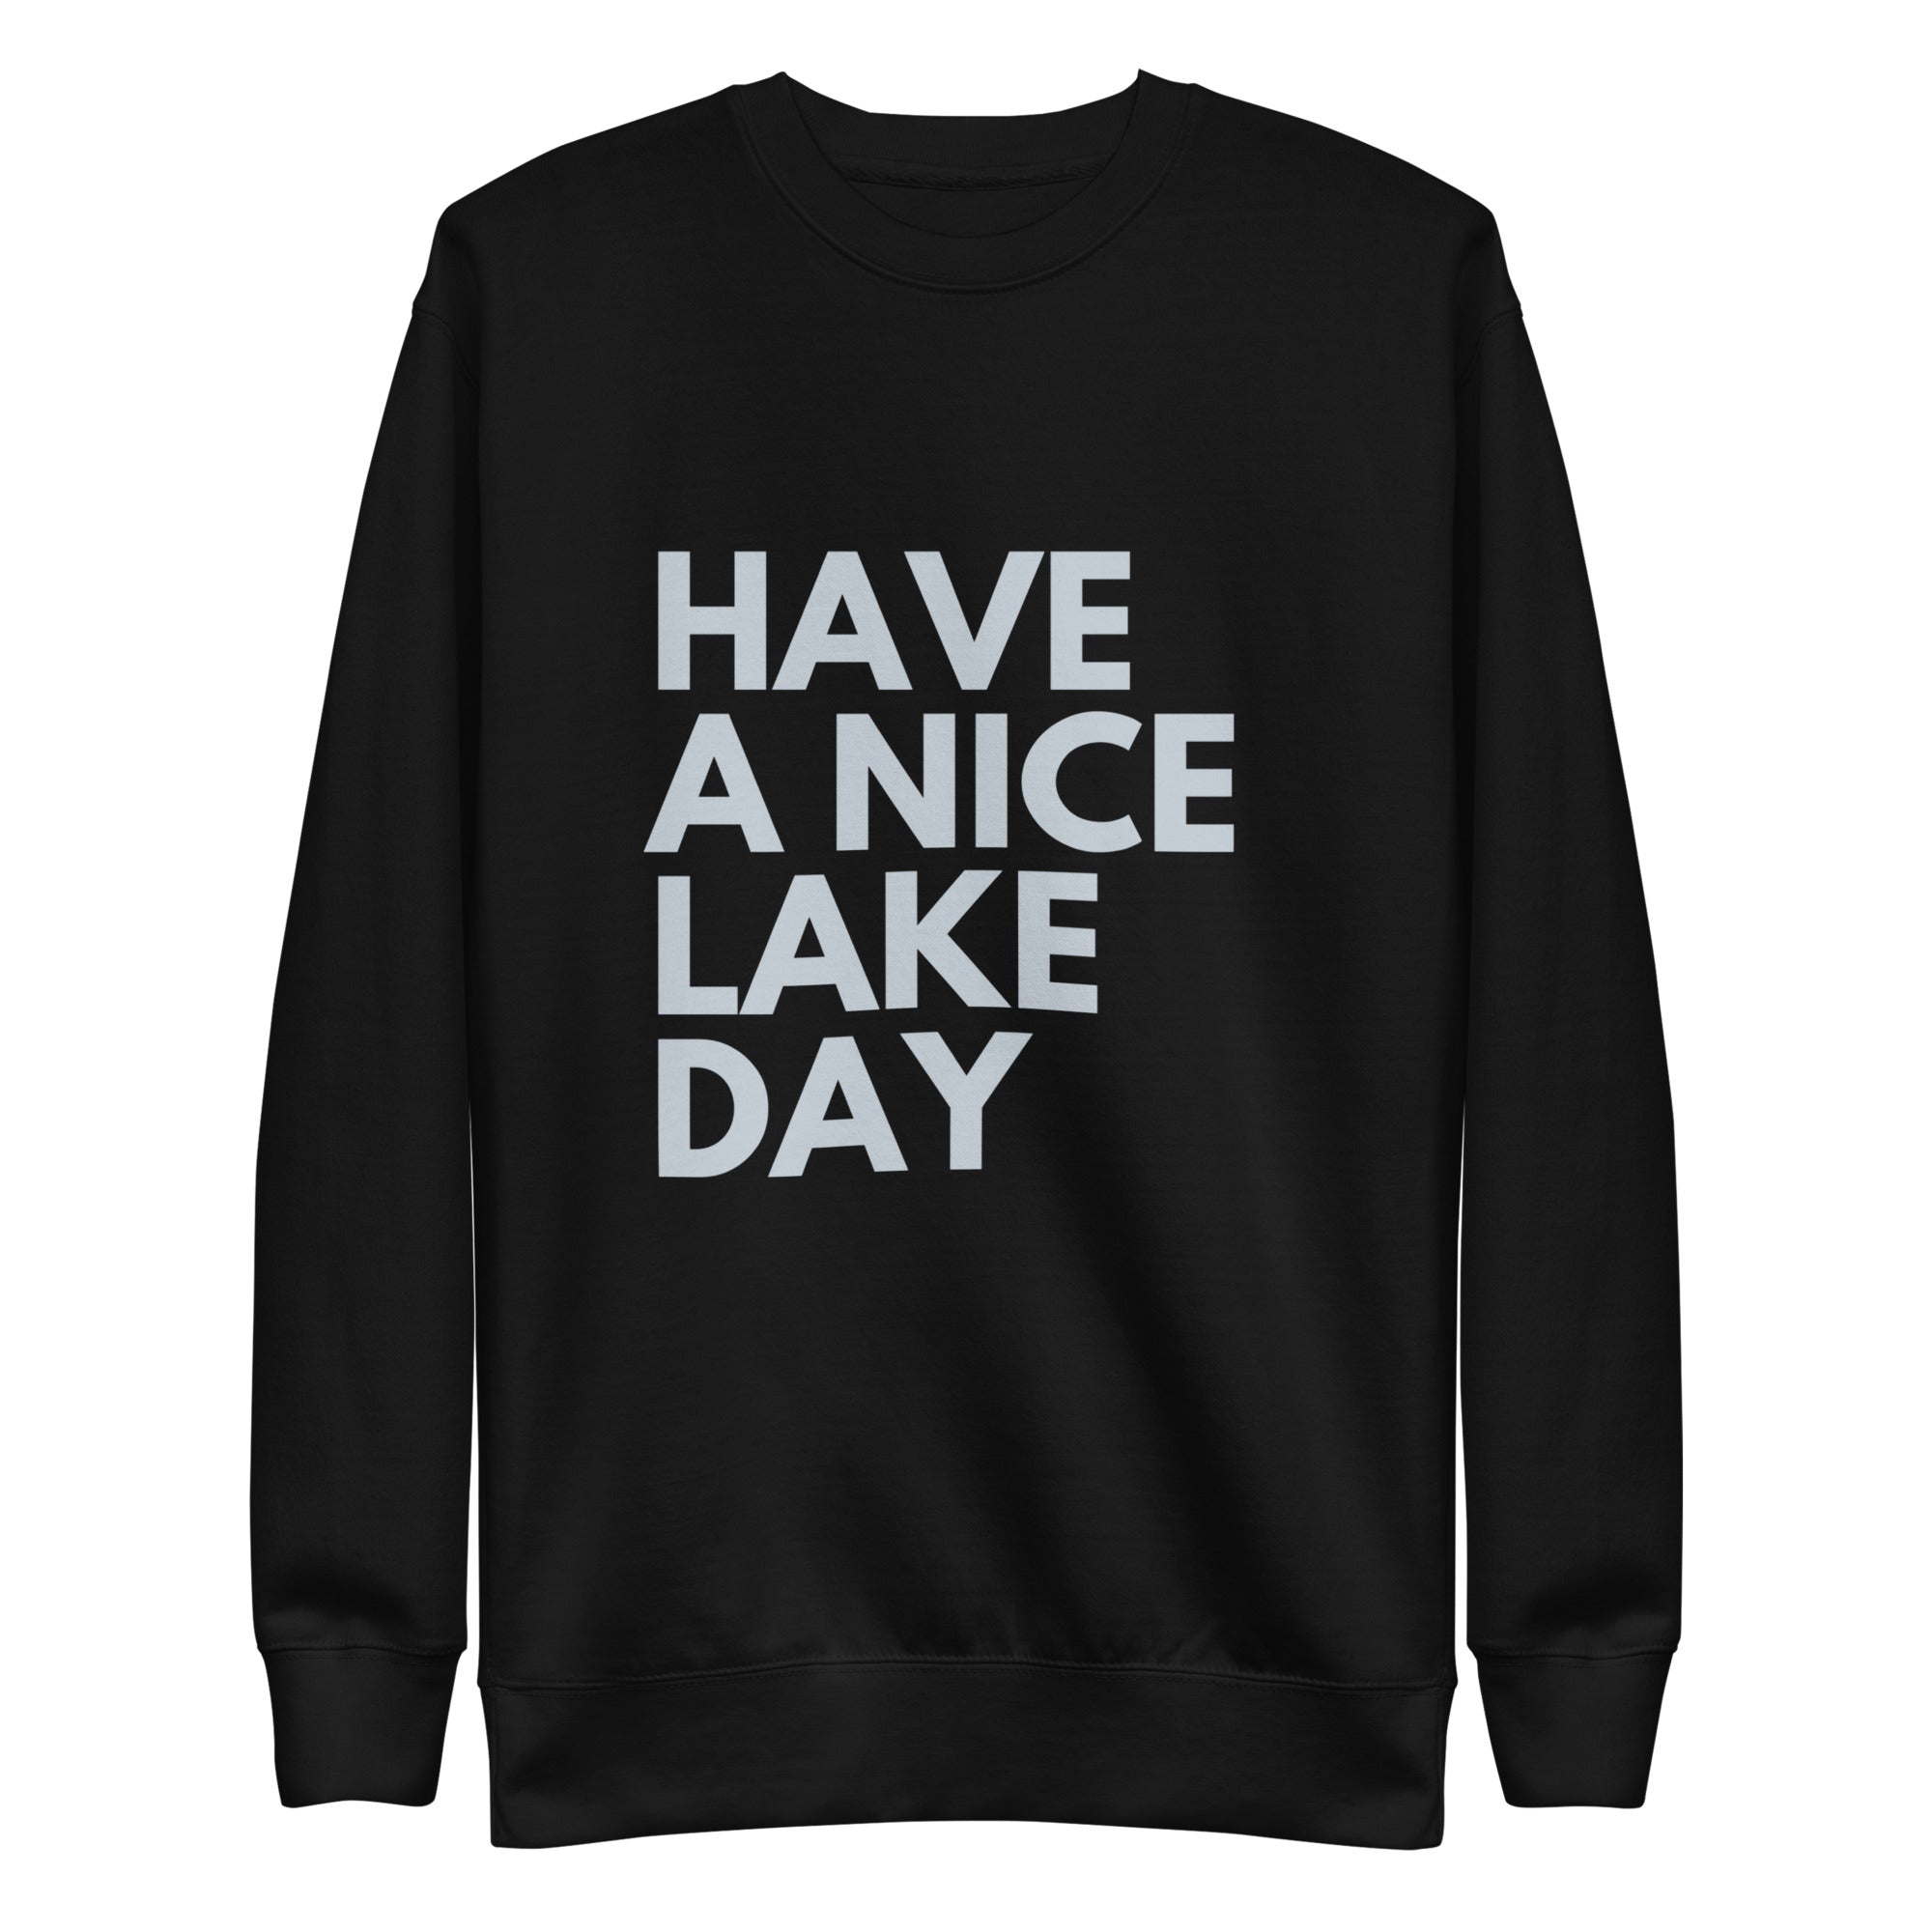 HAVE A NICE LAKE DAY Unisex Premium Sweatshirt